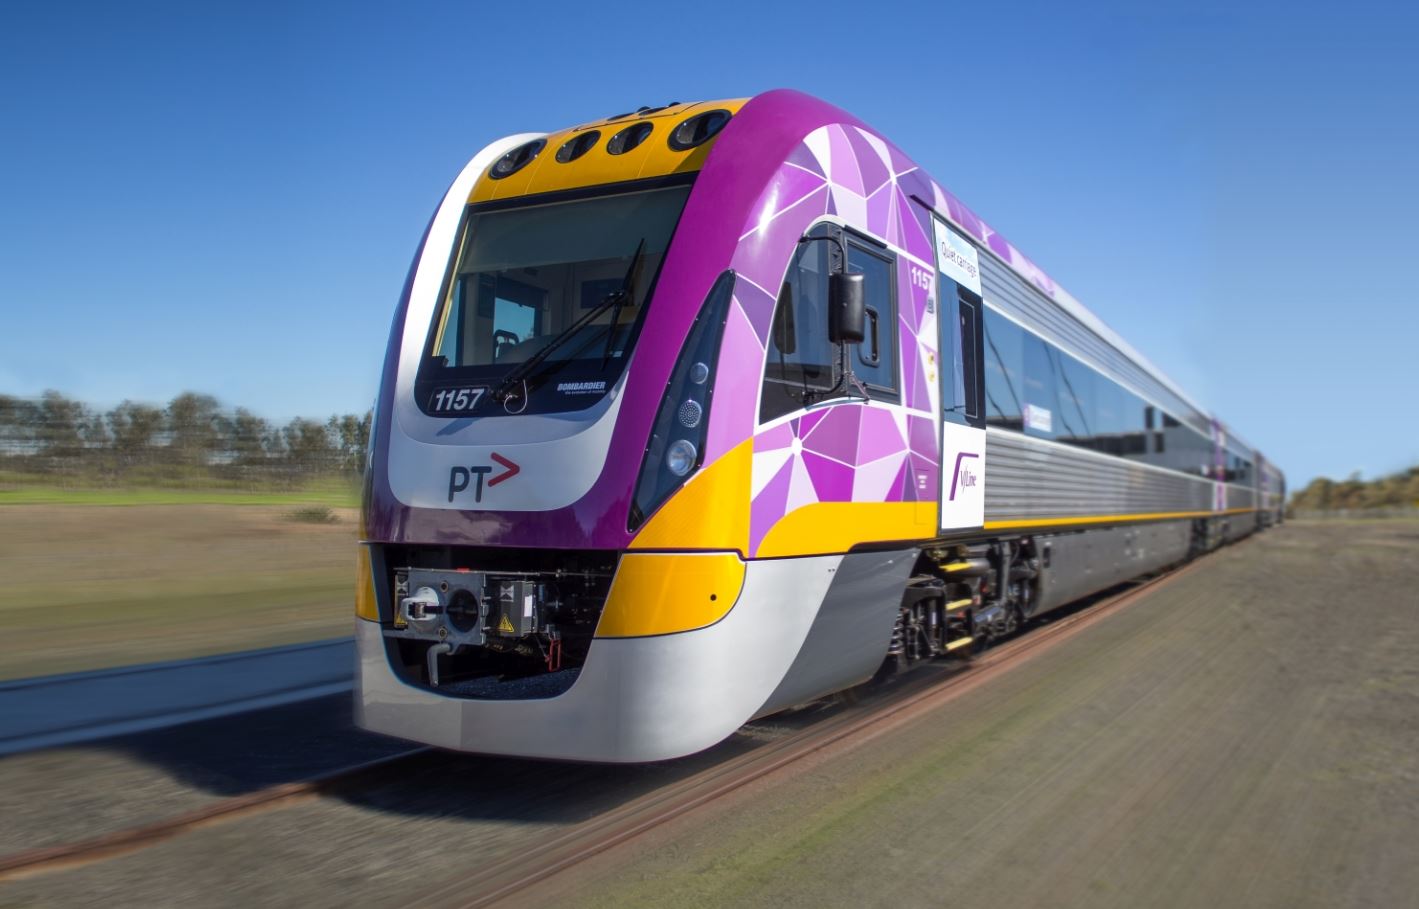 BOMBARDIER TRANSPORTATION AUSTRALIA PTY LTD chooses LEAN passenger seat for VLocity DMU platform